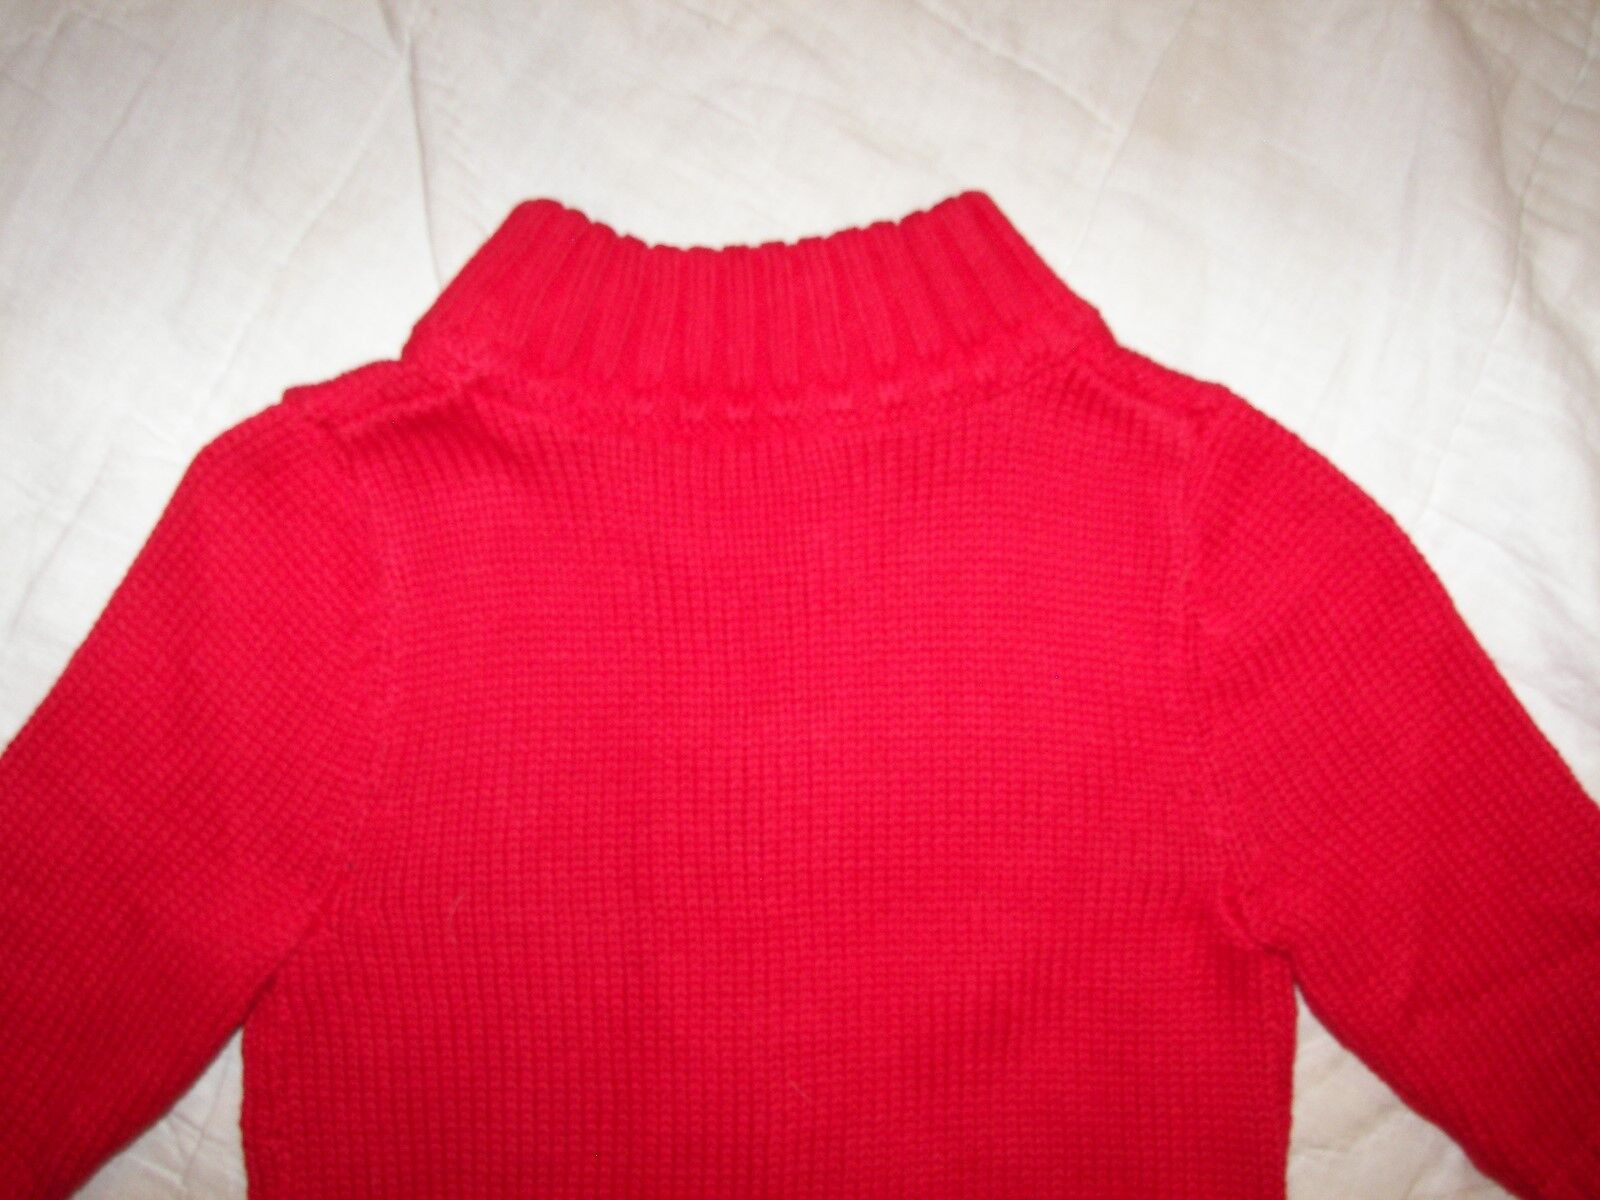 Osh Kosh B'gosh Baby Sweater - 9 Months - New with Tags